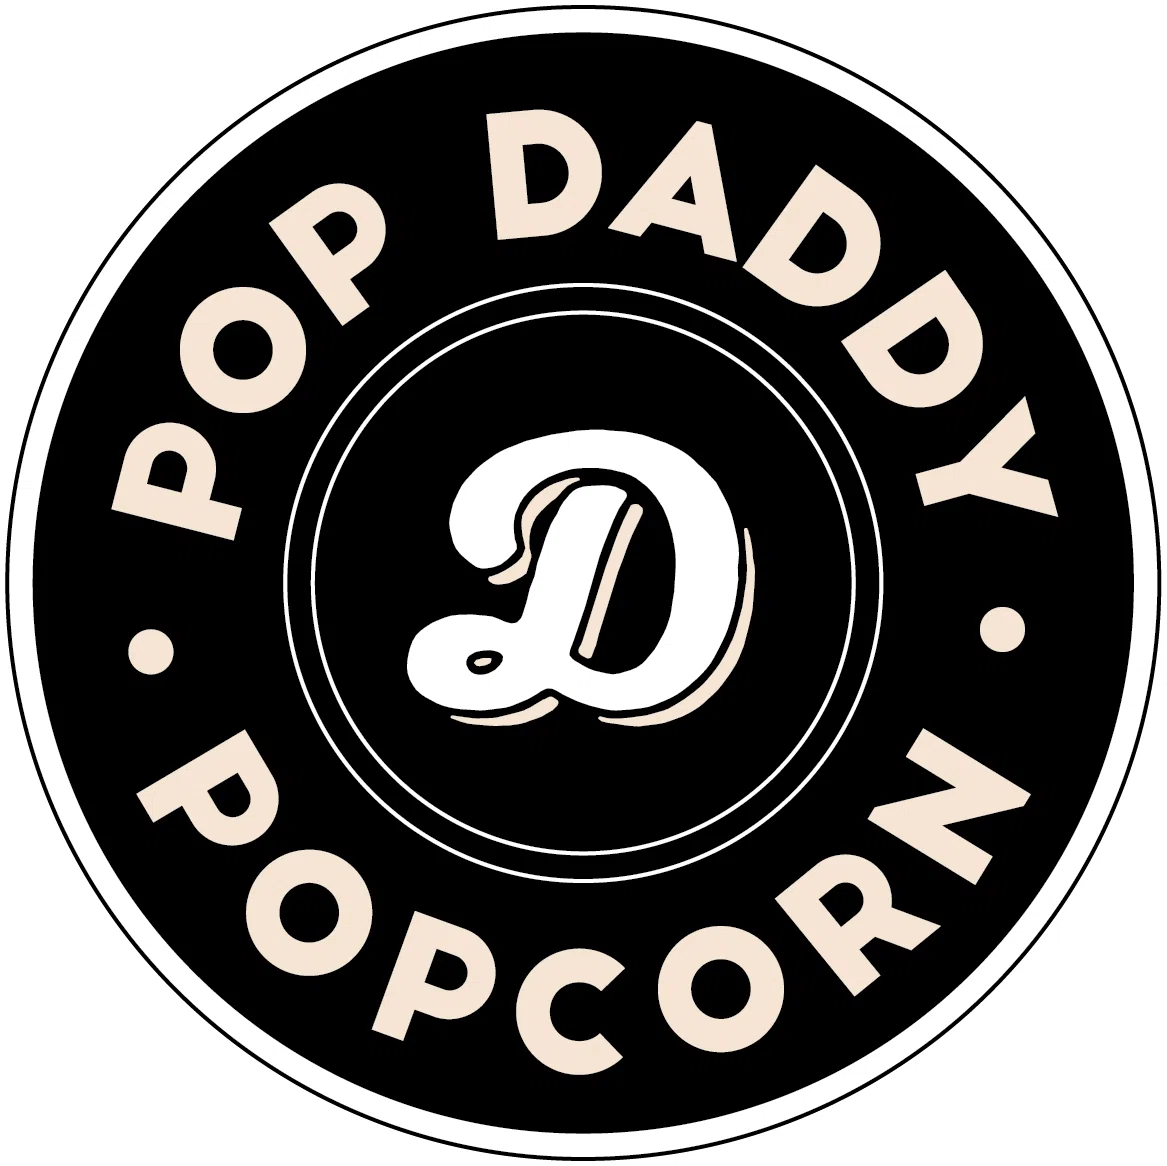 Popcorn Promo Code